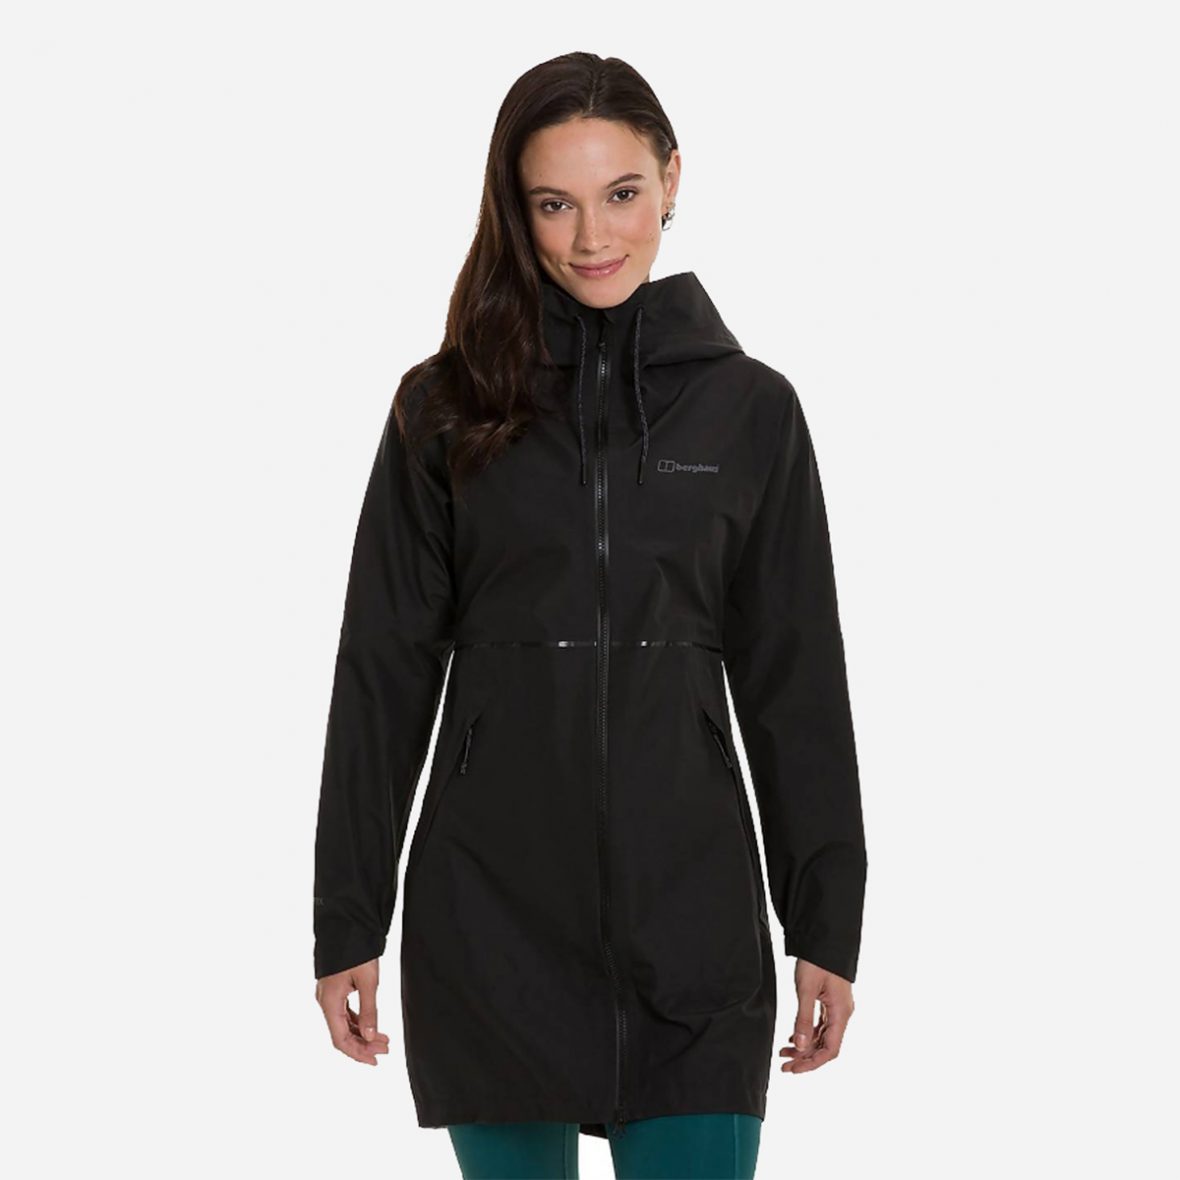 Berghaus Women’s Rothley GoreTex Waterproof Shell Jacket 4A000854